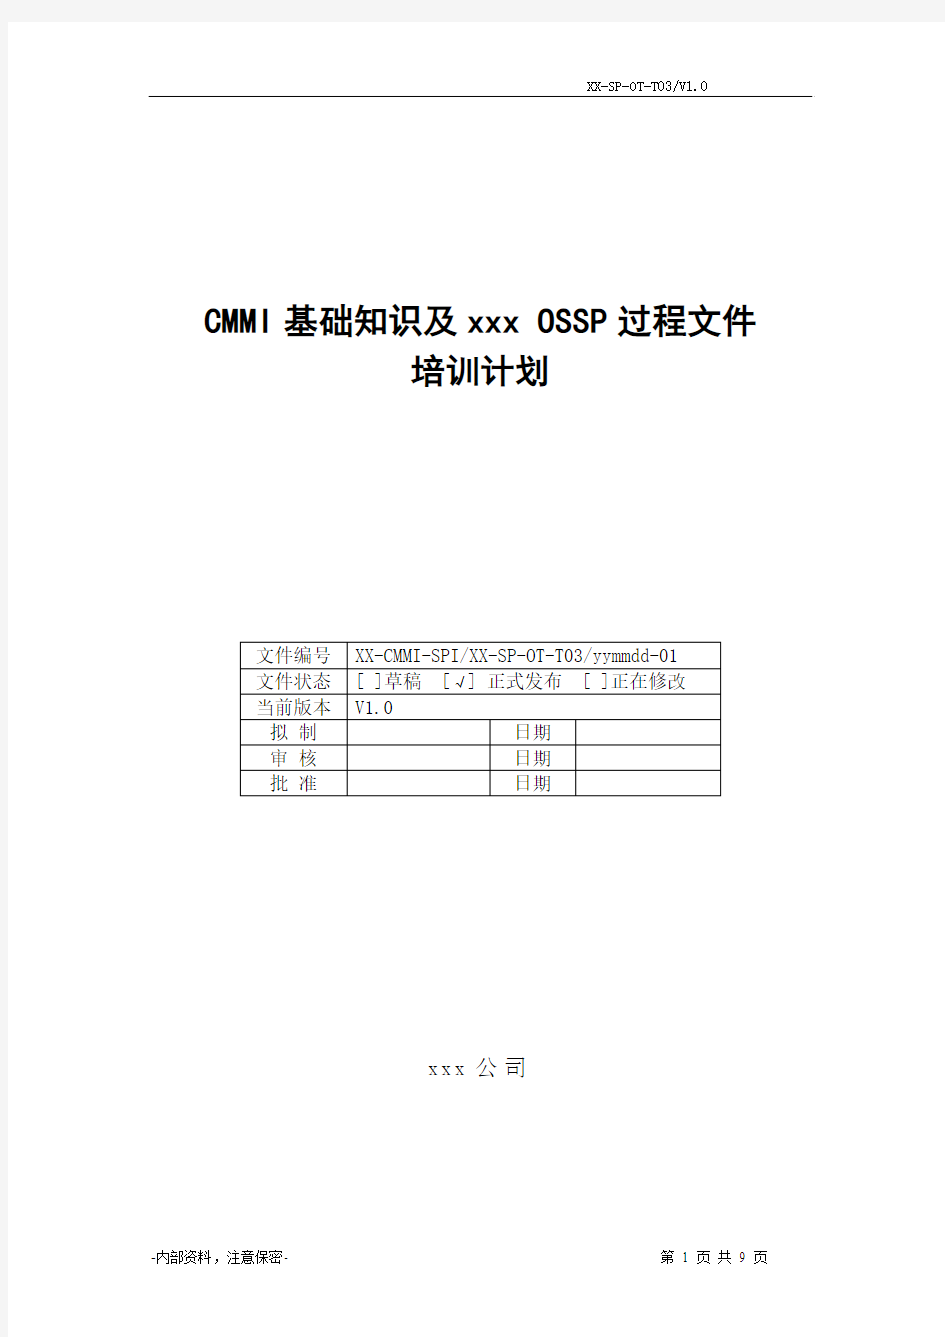 CMMI基础知识及公司OSSP过程文件培训计划